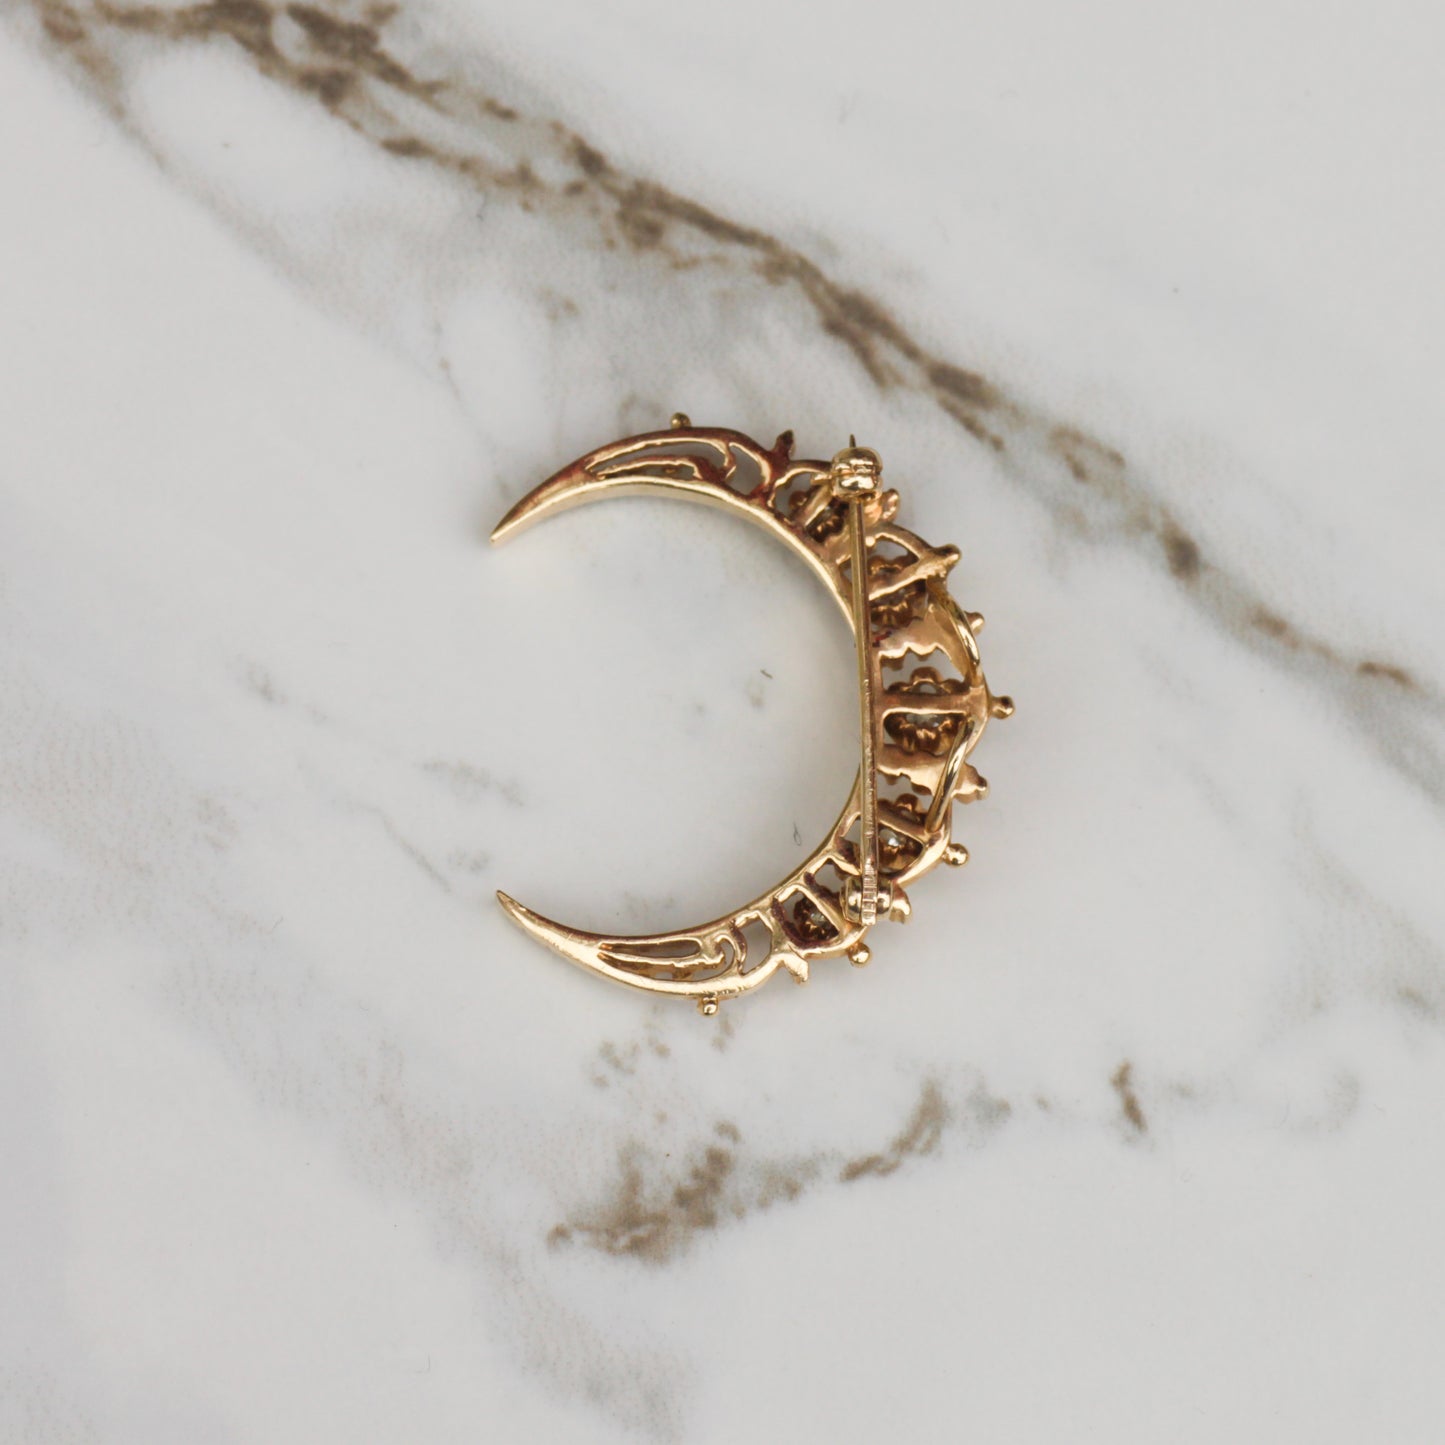 Vintage Crescent Moon Diamond Brooch/Pendant 14k Gold